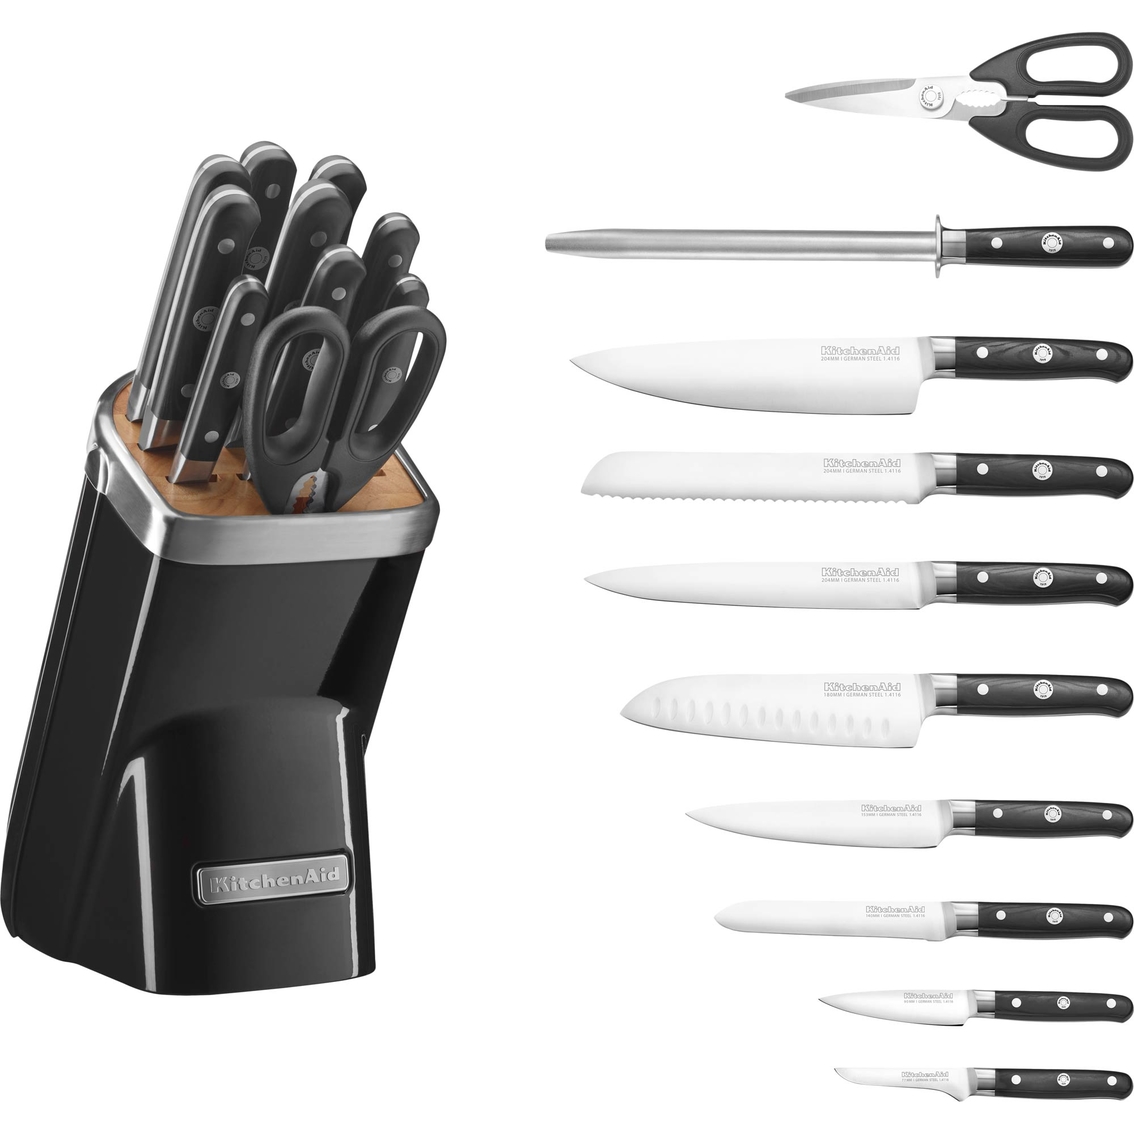 Kitchenaid Professional Series 11 Pc. Set | Cutlery Sets | Household | Shop Exchange